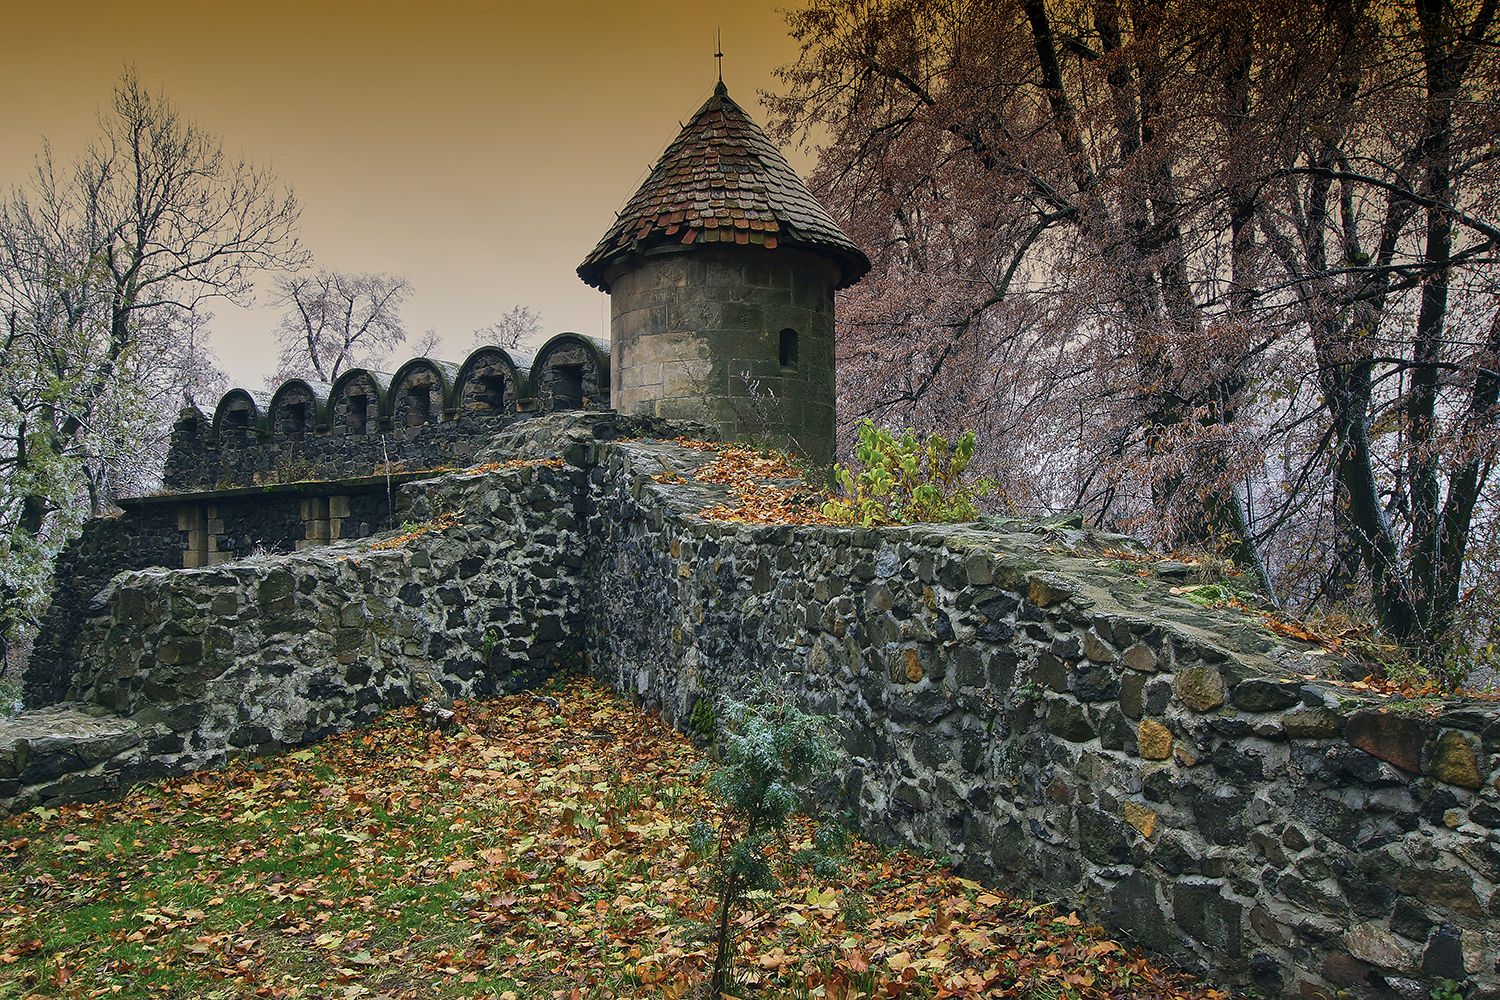 Grodziec Castle Wallpapers